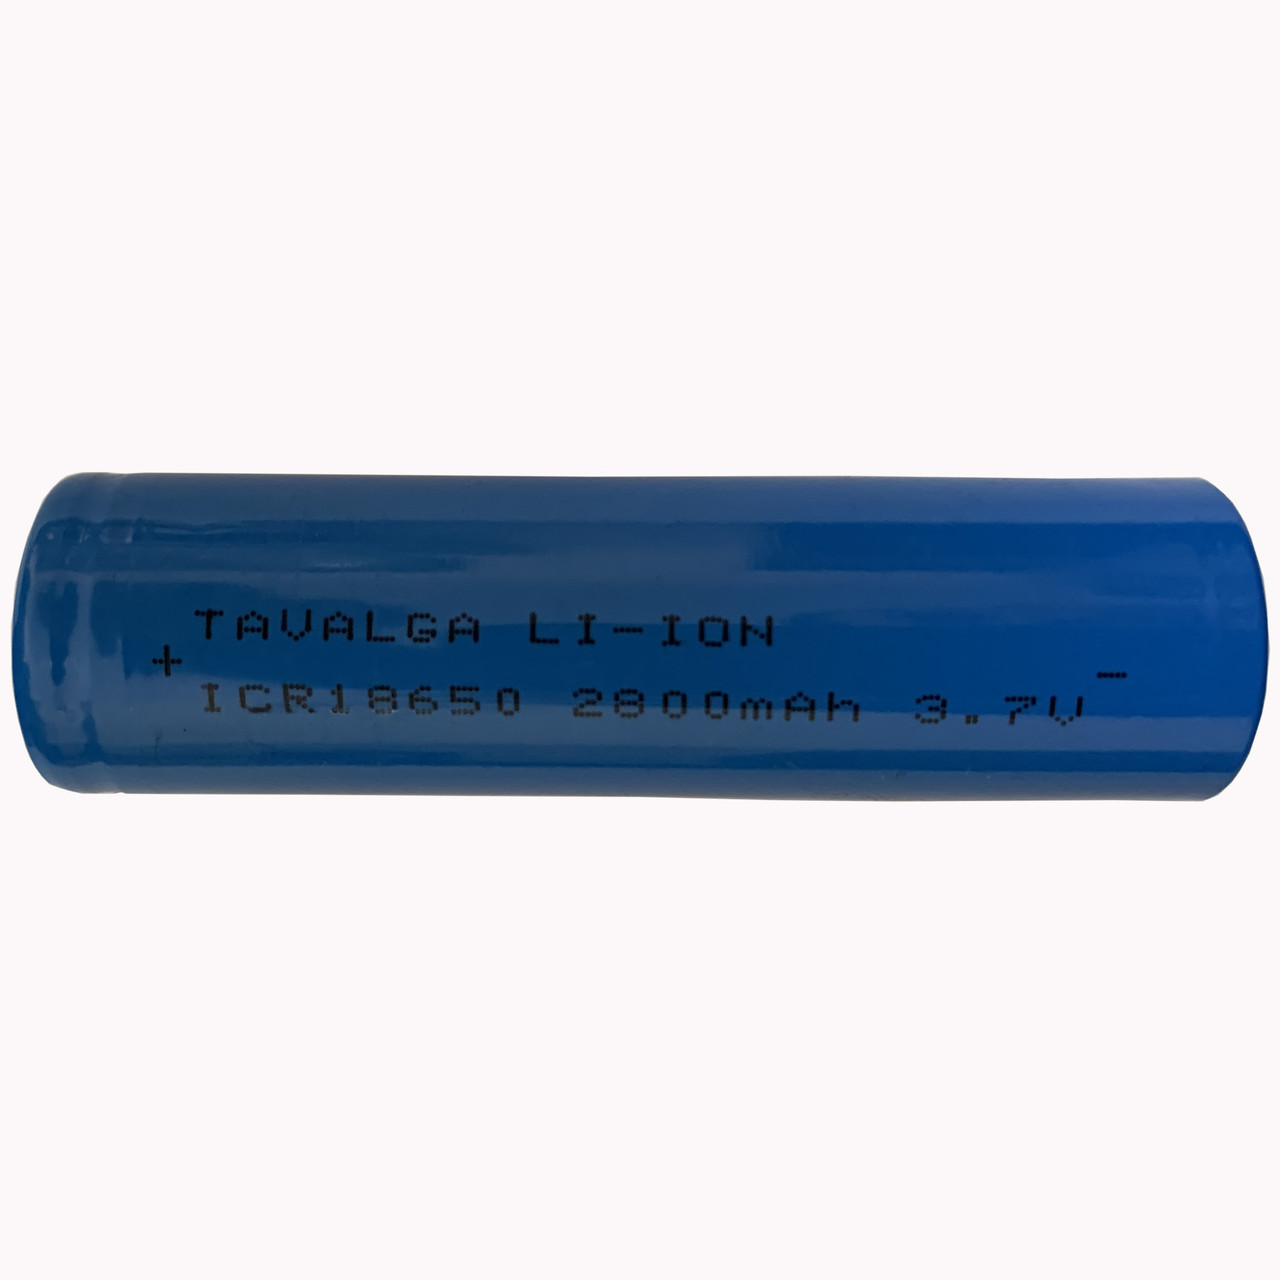 Аккумулятор 18650 Li-ion 3,7V TAVALGA 2800mAh, фото 1